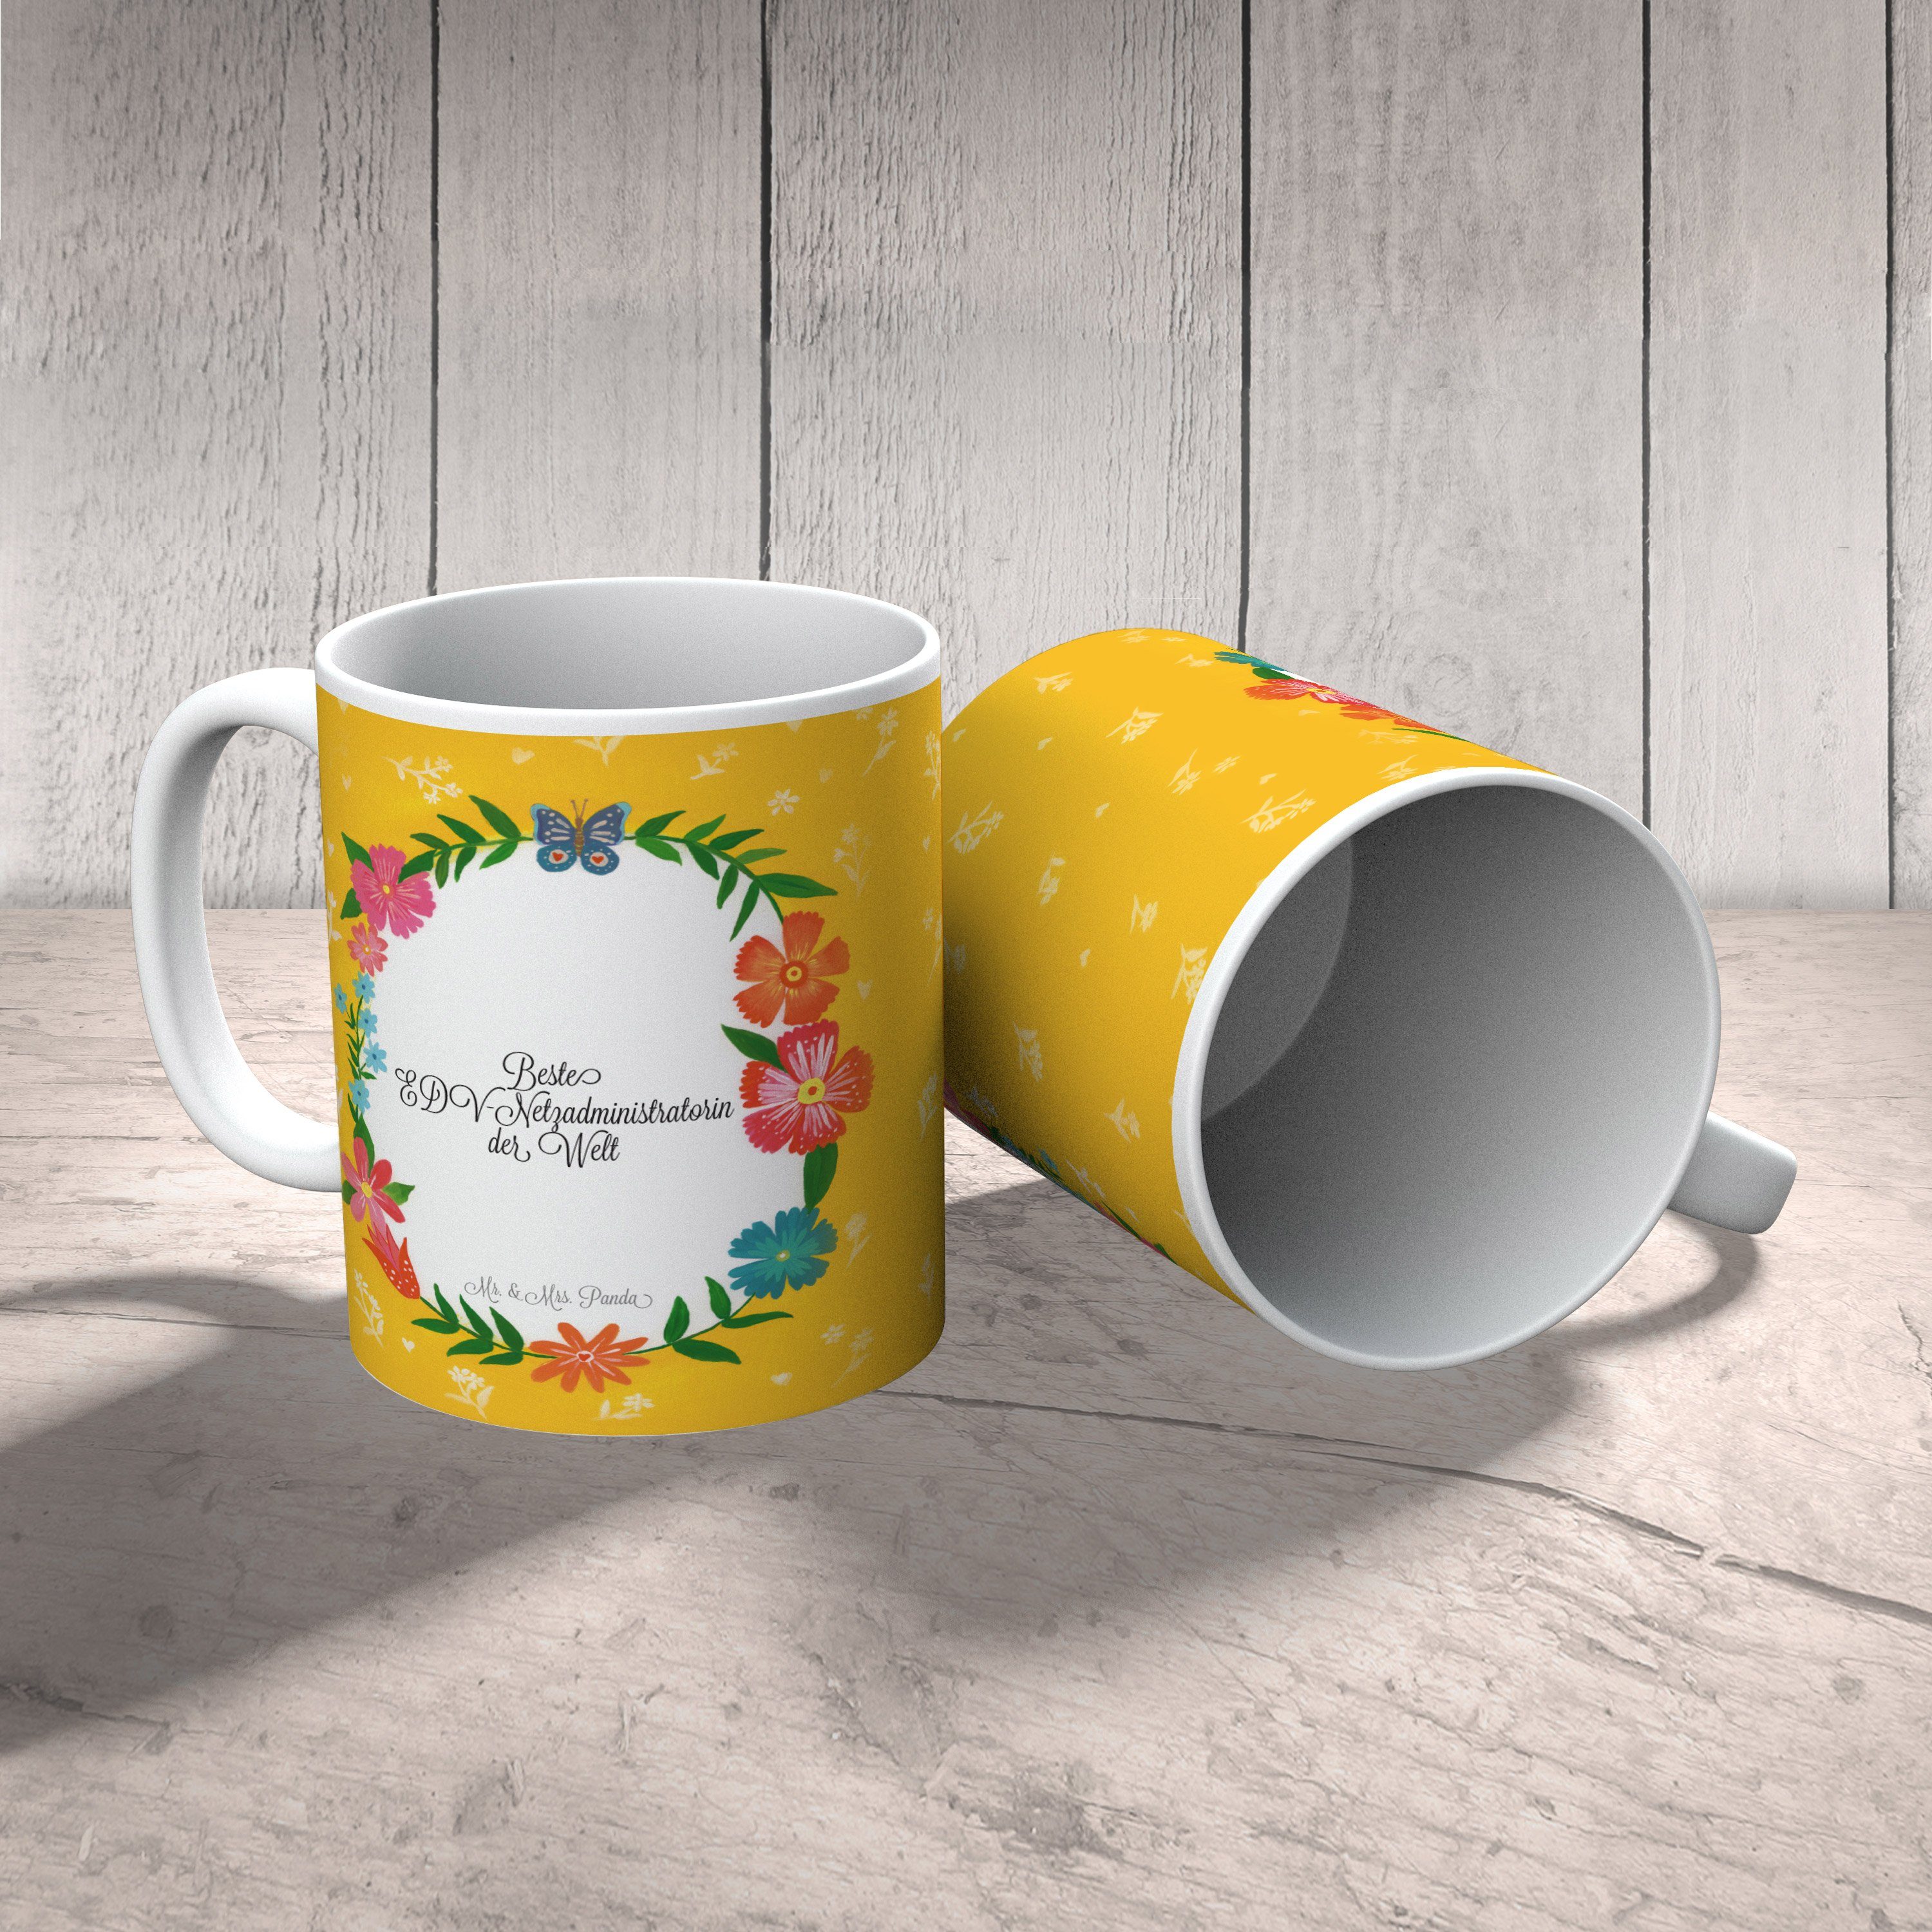 Mr. & Mrs. Panda Tasse Geschenk, Tasse, - Gratulation, Geschenk, EDV-Netzadministratorin Keramik Büro